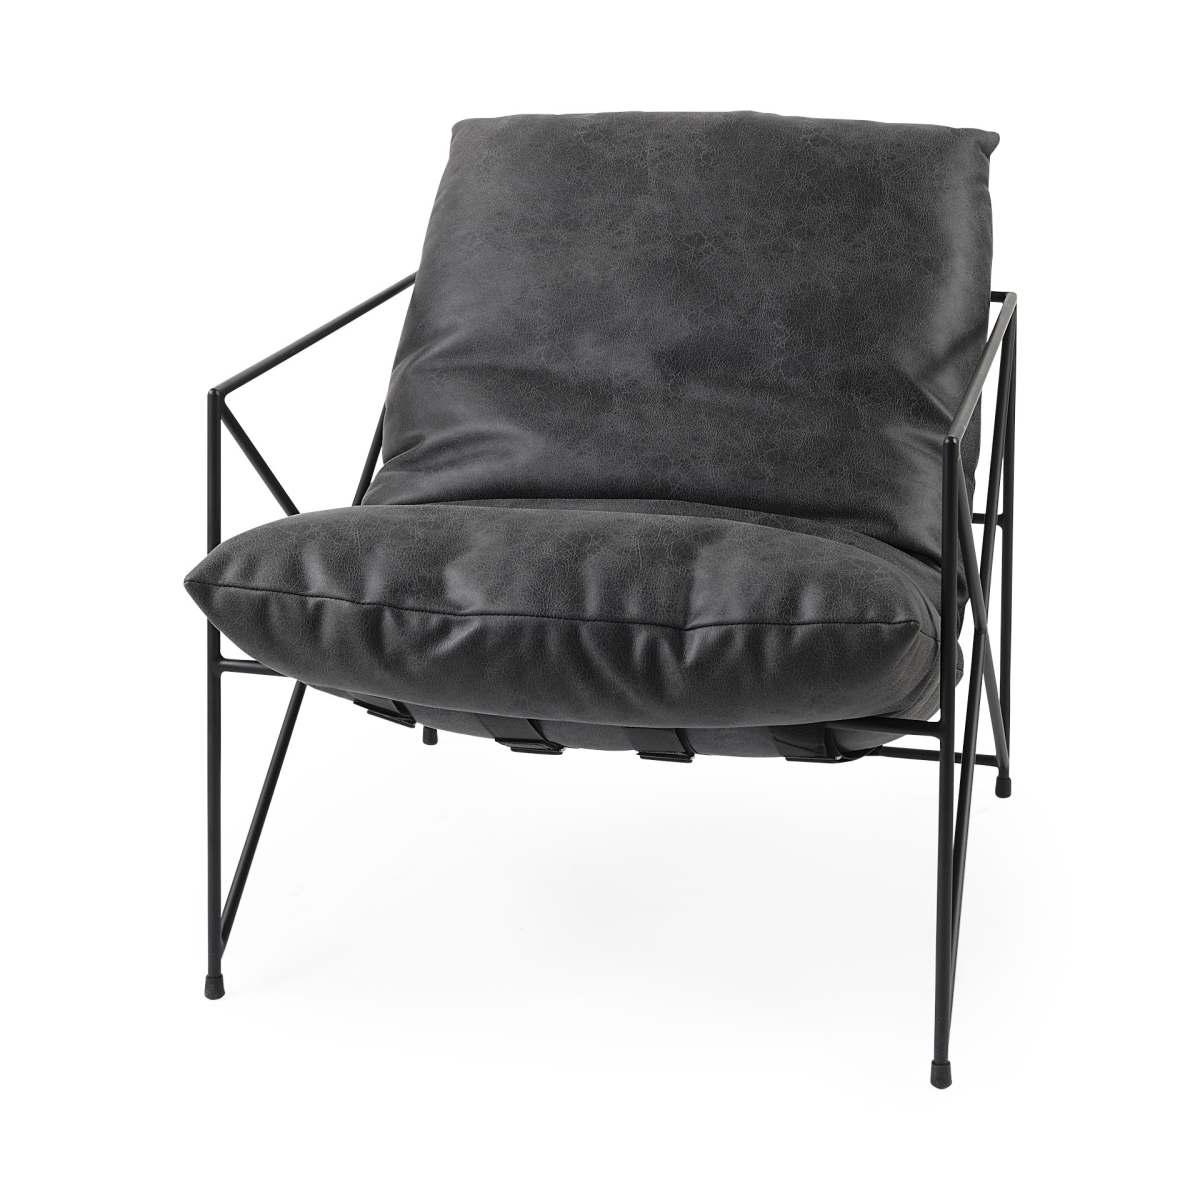 Gfancy Fixtures Black Faux Leather Contemporary Metal Chair